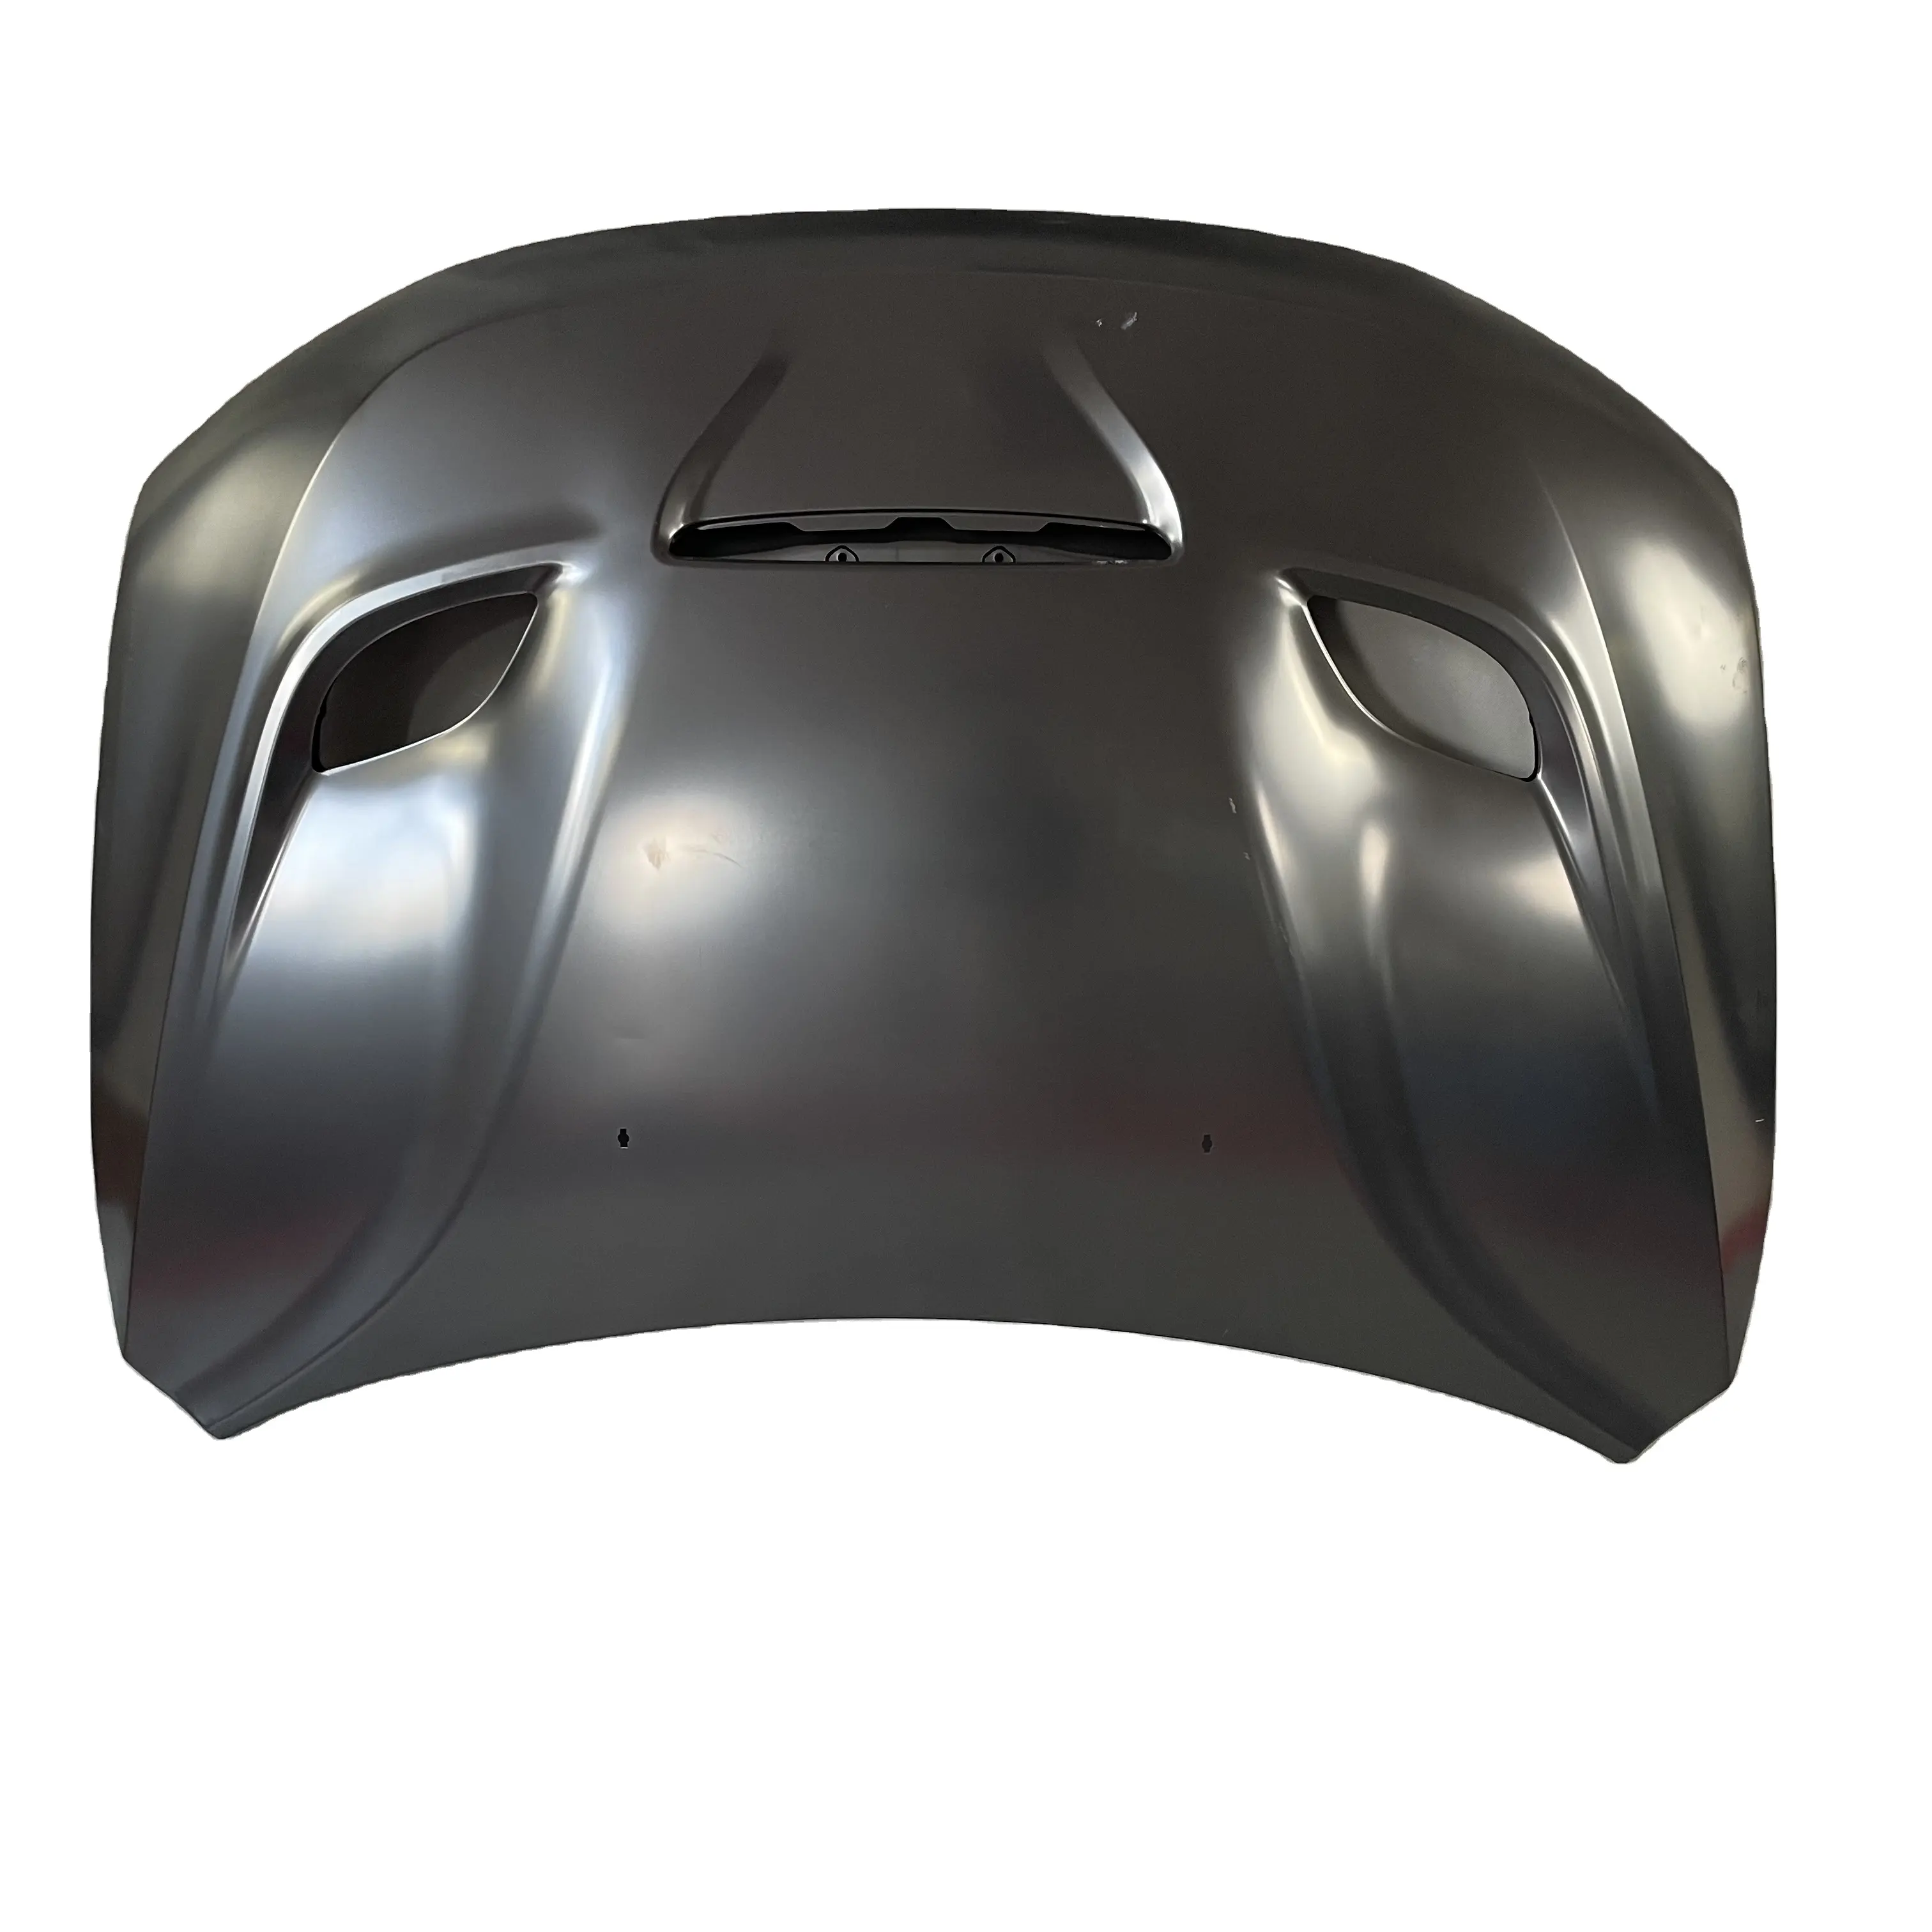 Aluminum Material car body parts accessories OEM#68309501AG D-odge Durango hood car bonnet